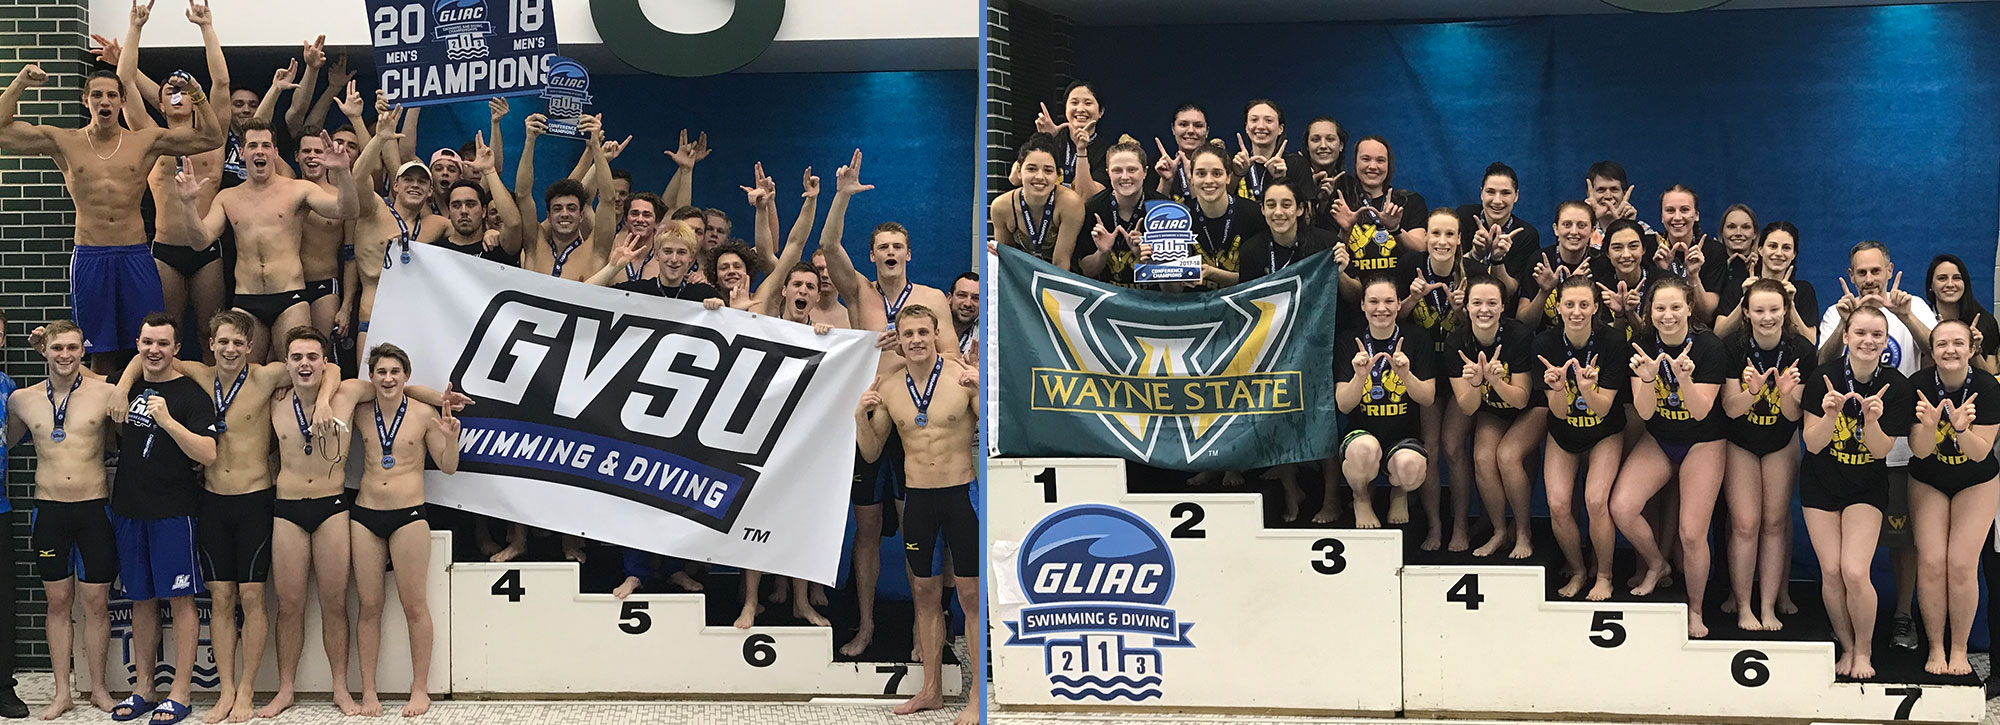 Grand Valley State Men, Wayne State Women Capture 2018 GLIAC Swimming & Diving Championships